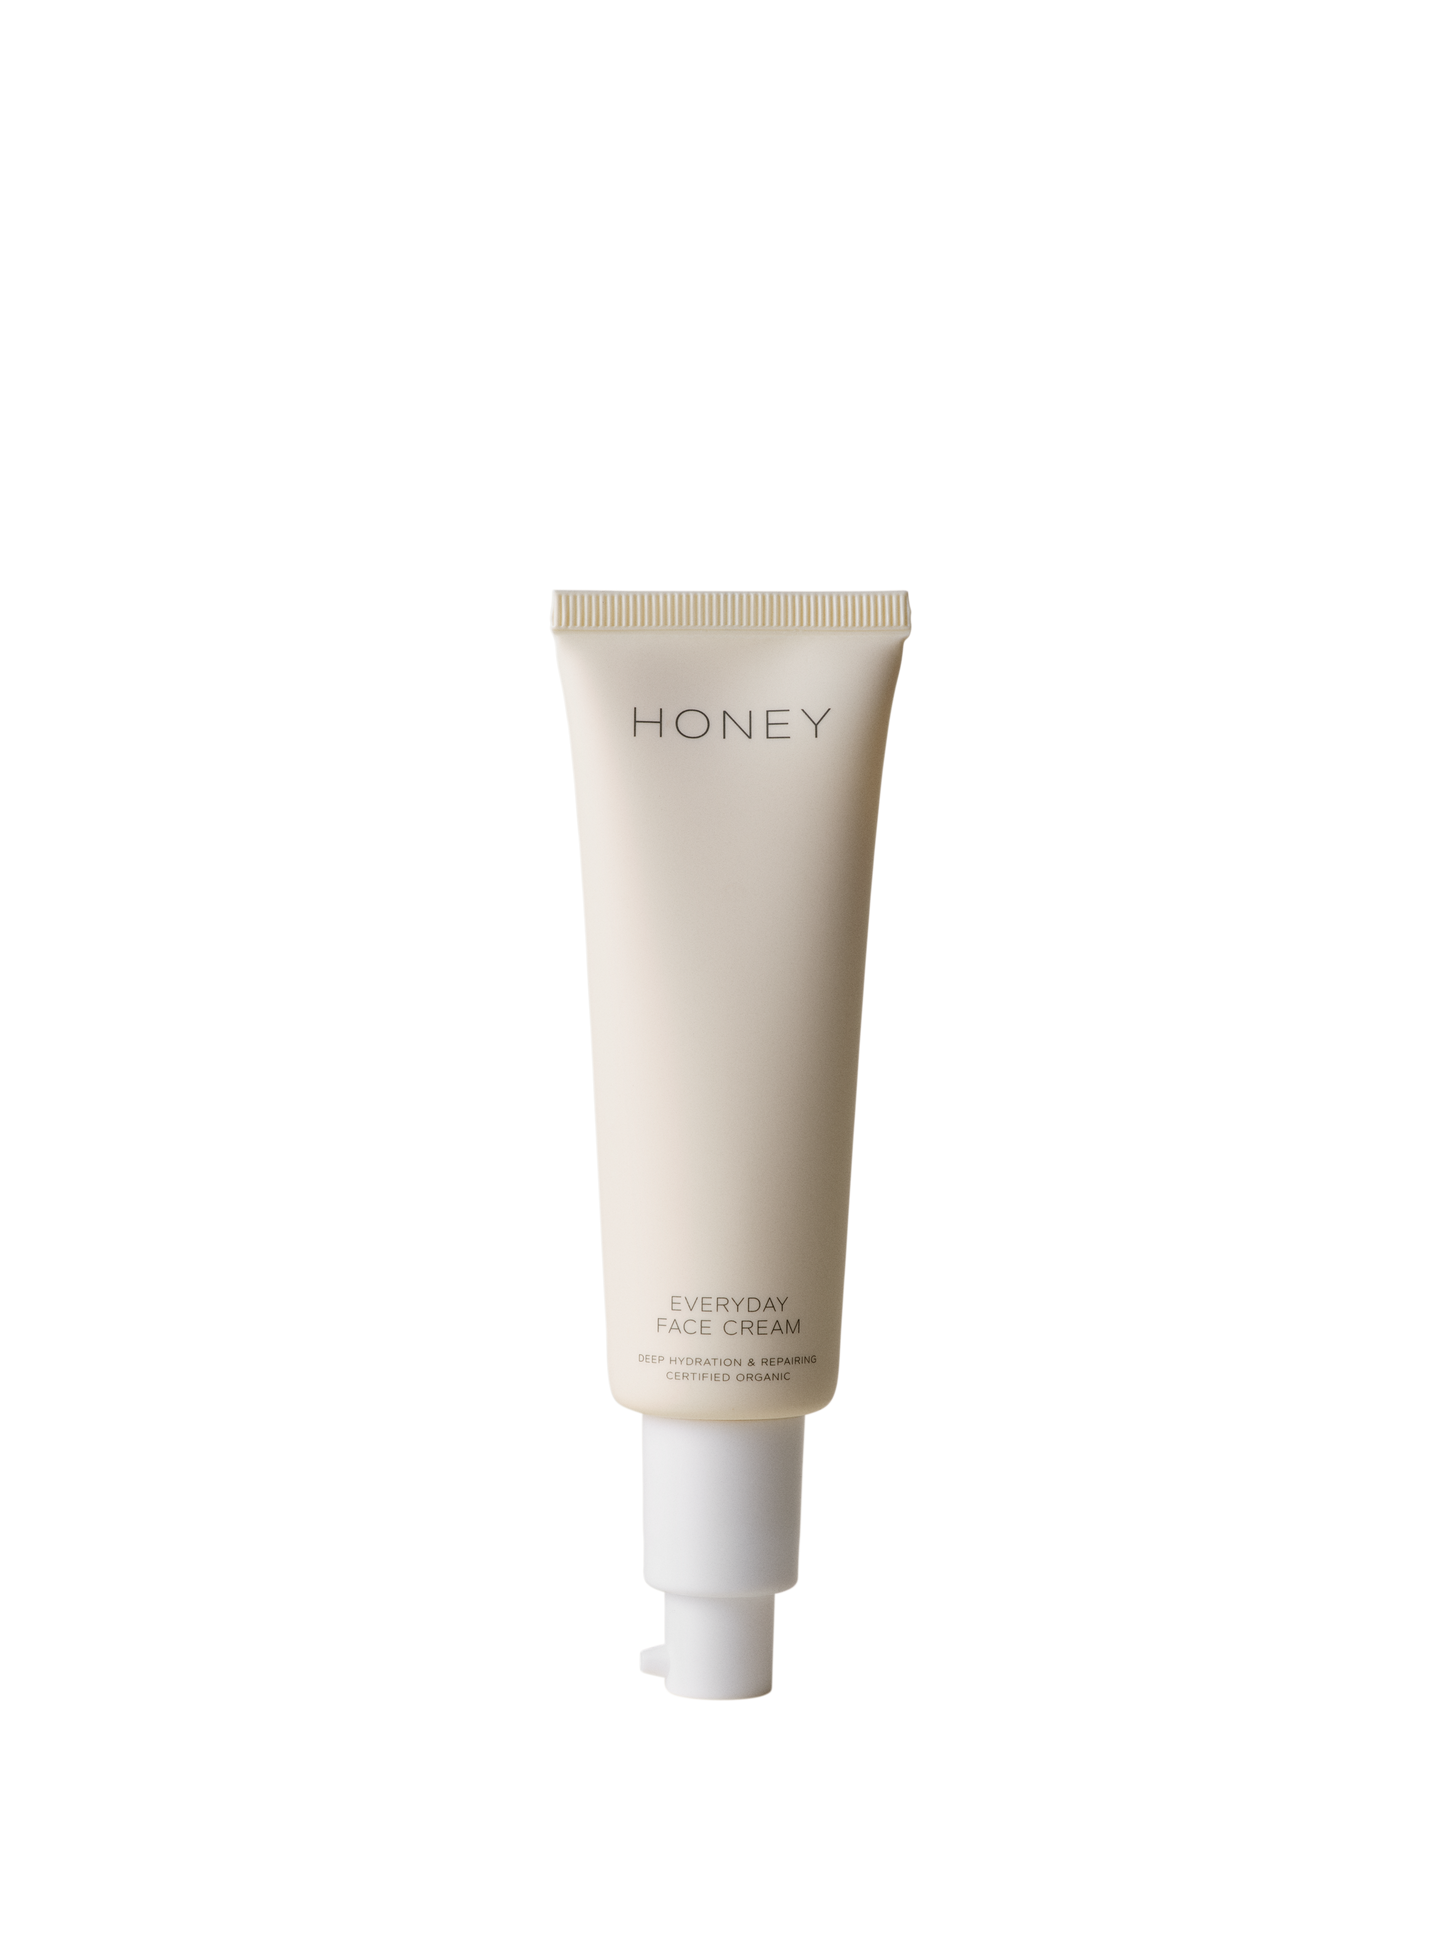 Everyday Face Cream from HONEY, open tube